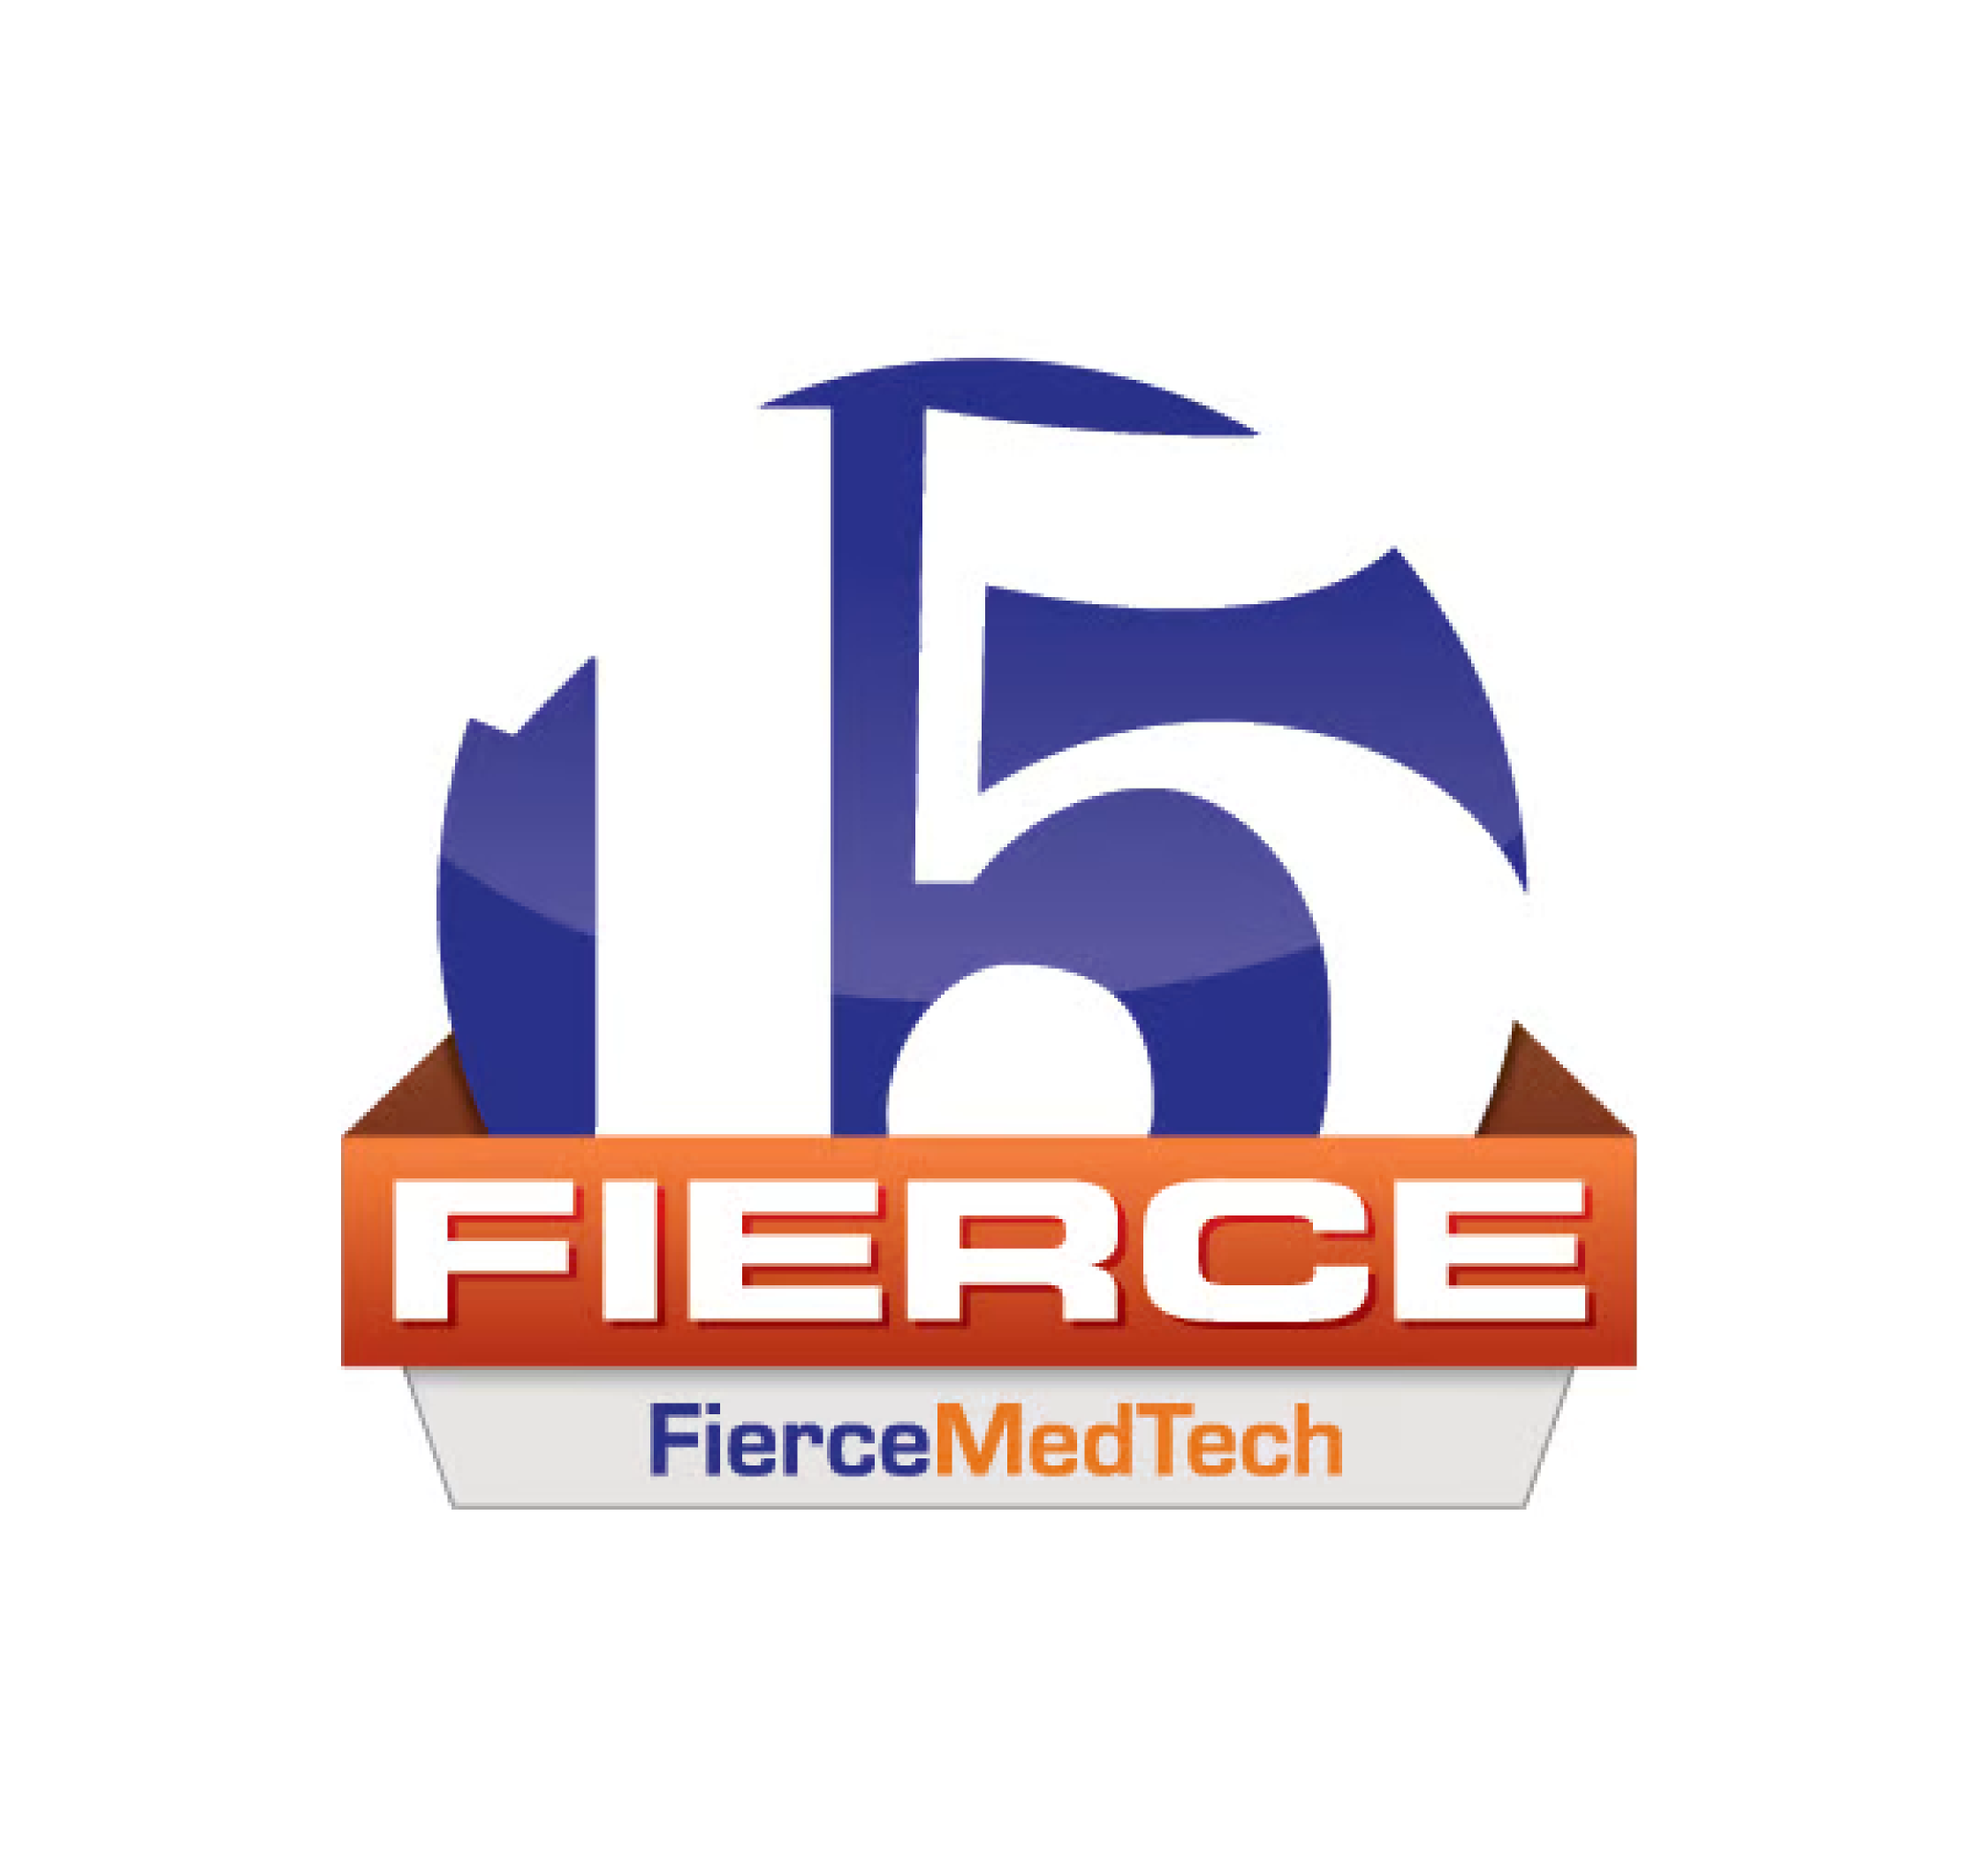 Fierce 15 Company